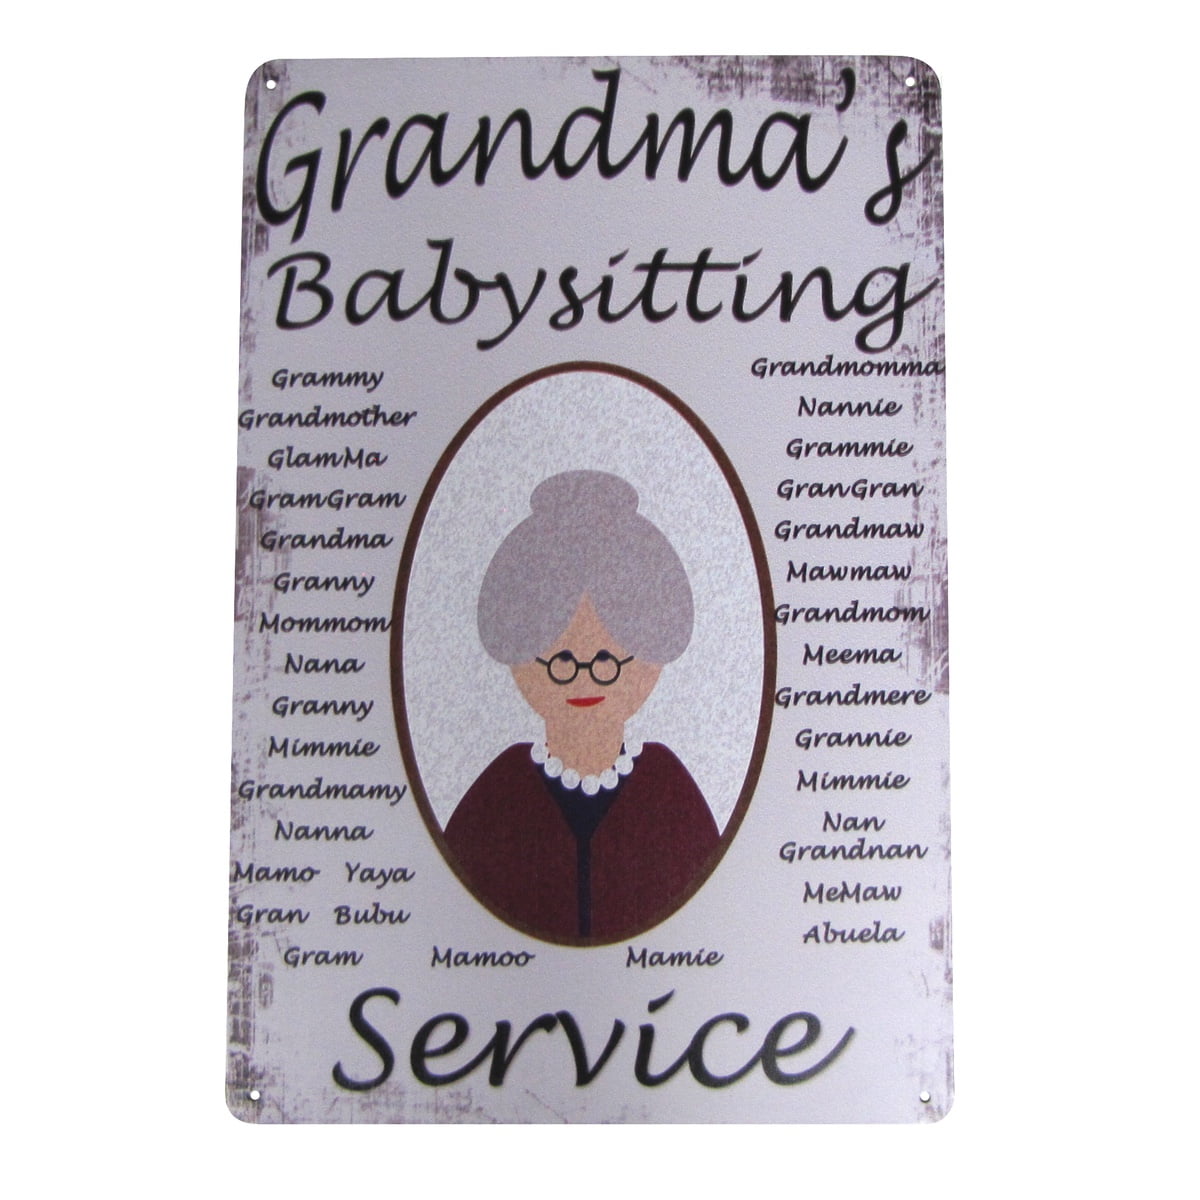 Nanna Gran Grandmother Christmas Card Grandma Nannie Nanny Granny Nan